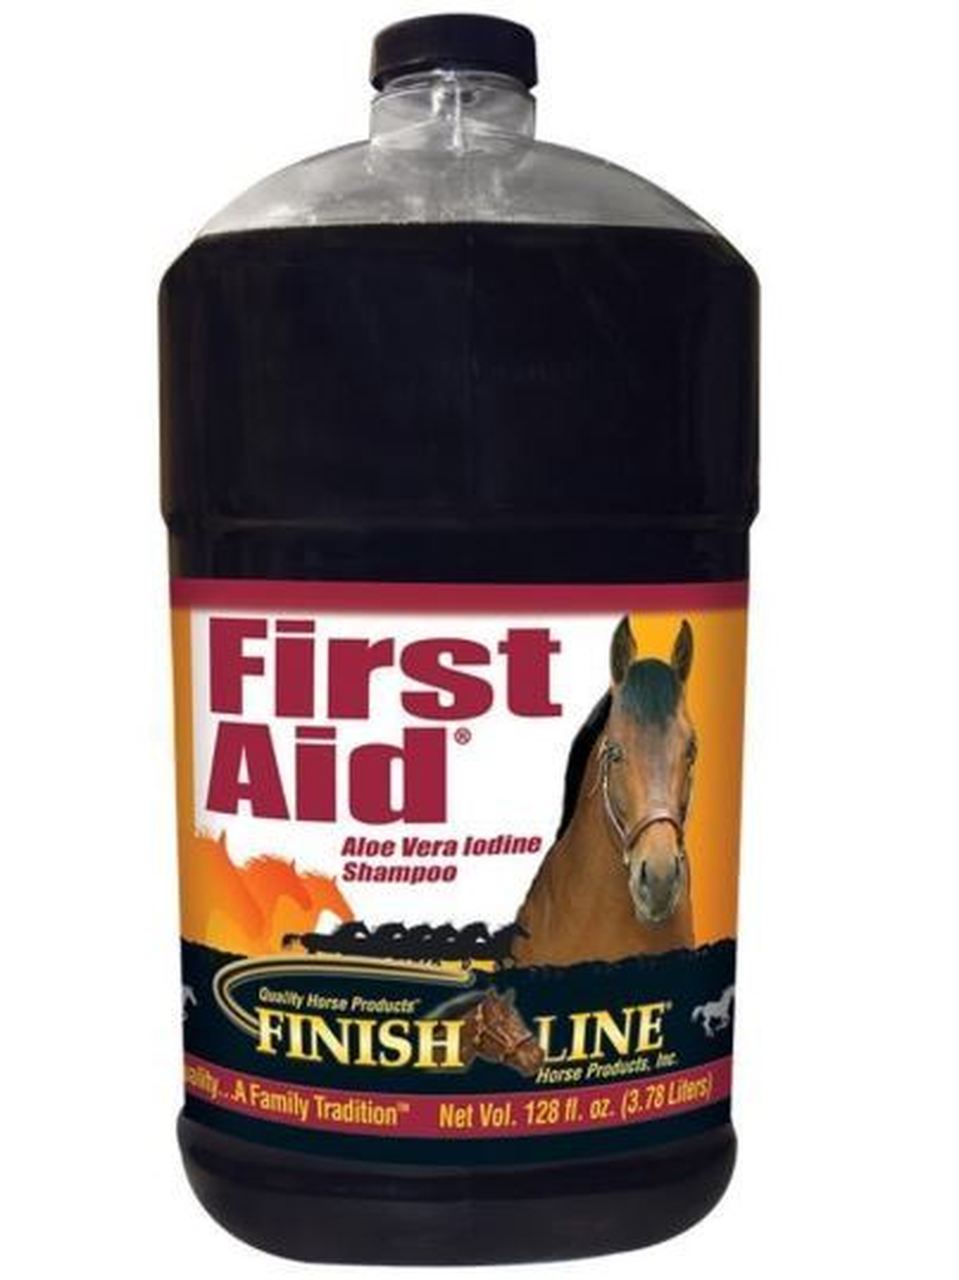 Finish Line First Aid Aloe Vera Iodine Shampoo 128 oz